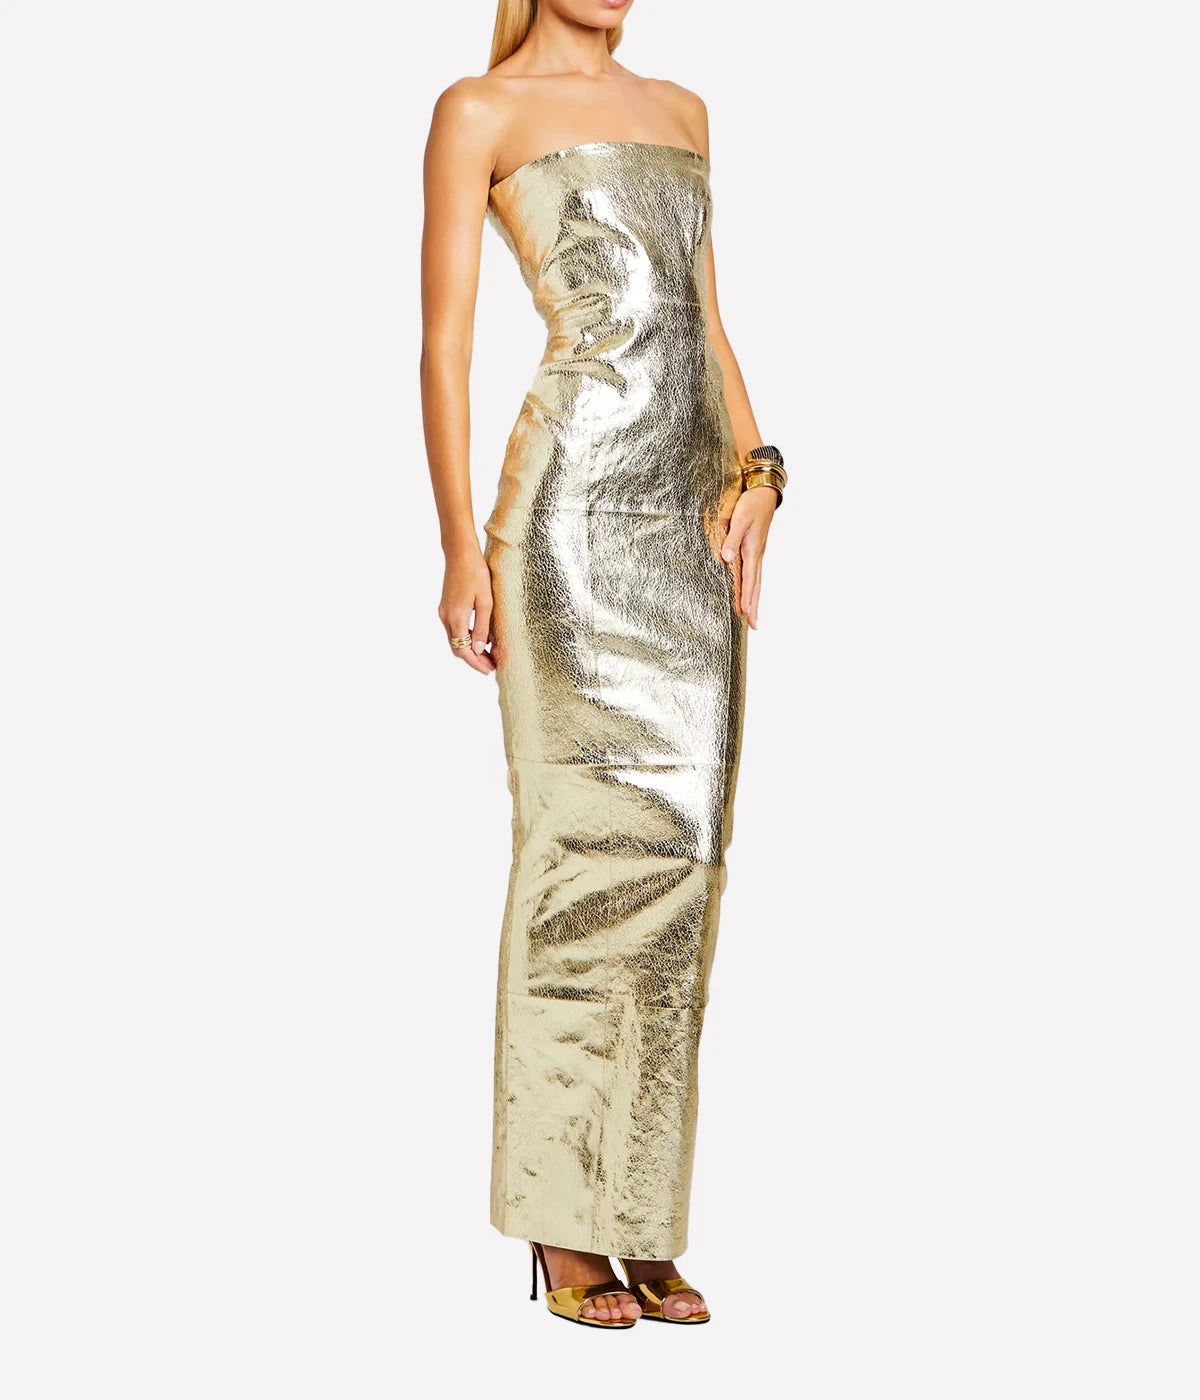 Lavonne Dress in Gold